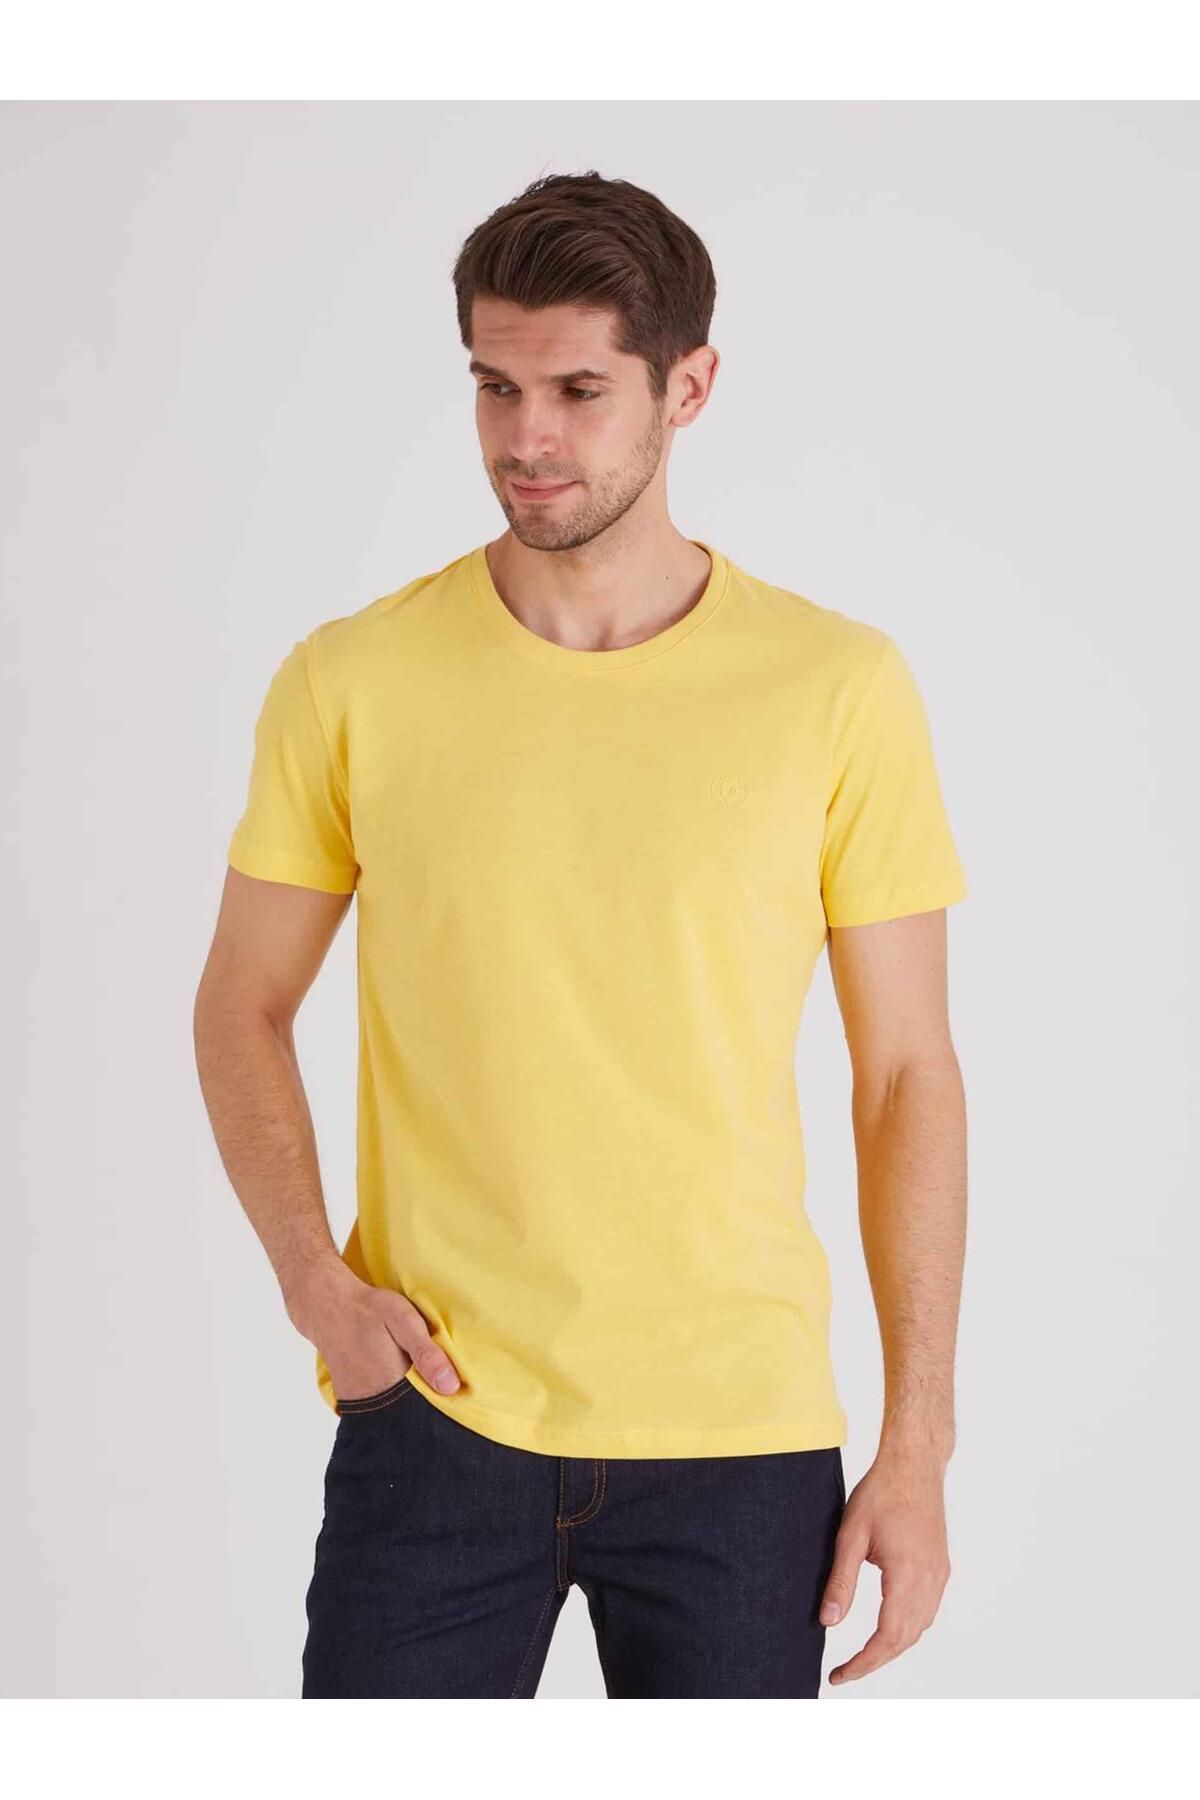 Dufy Sarı Erkek Slim Fit Baskılı Bisiklet Yaka Tshirt - 63040